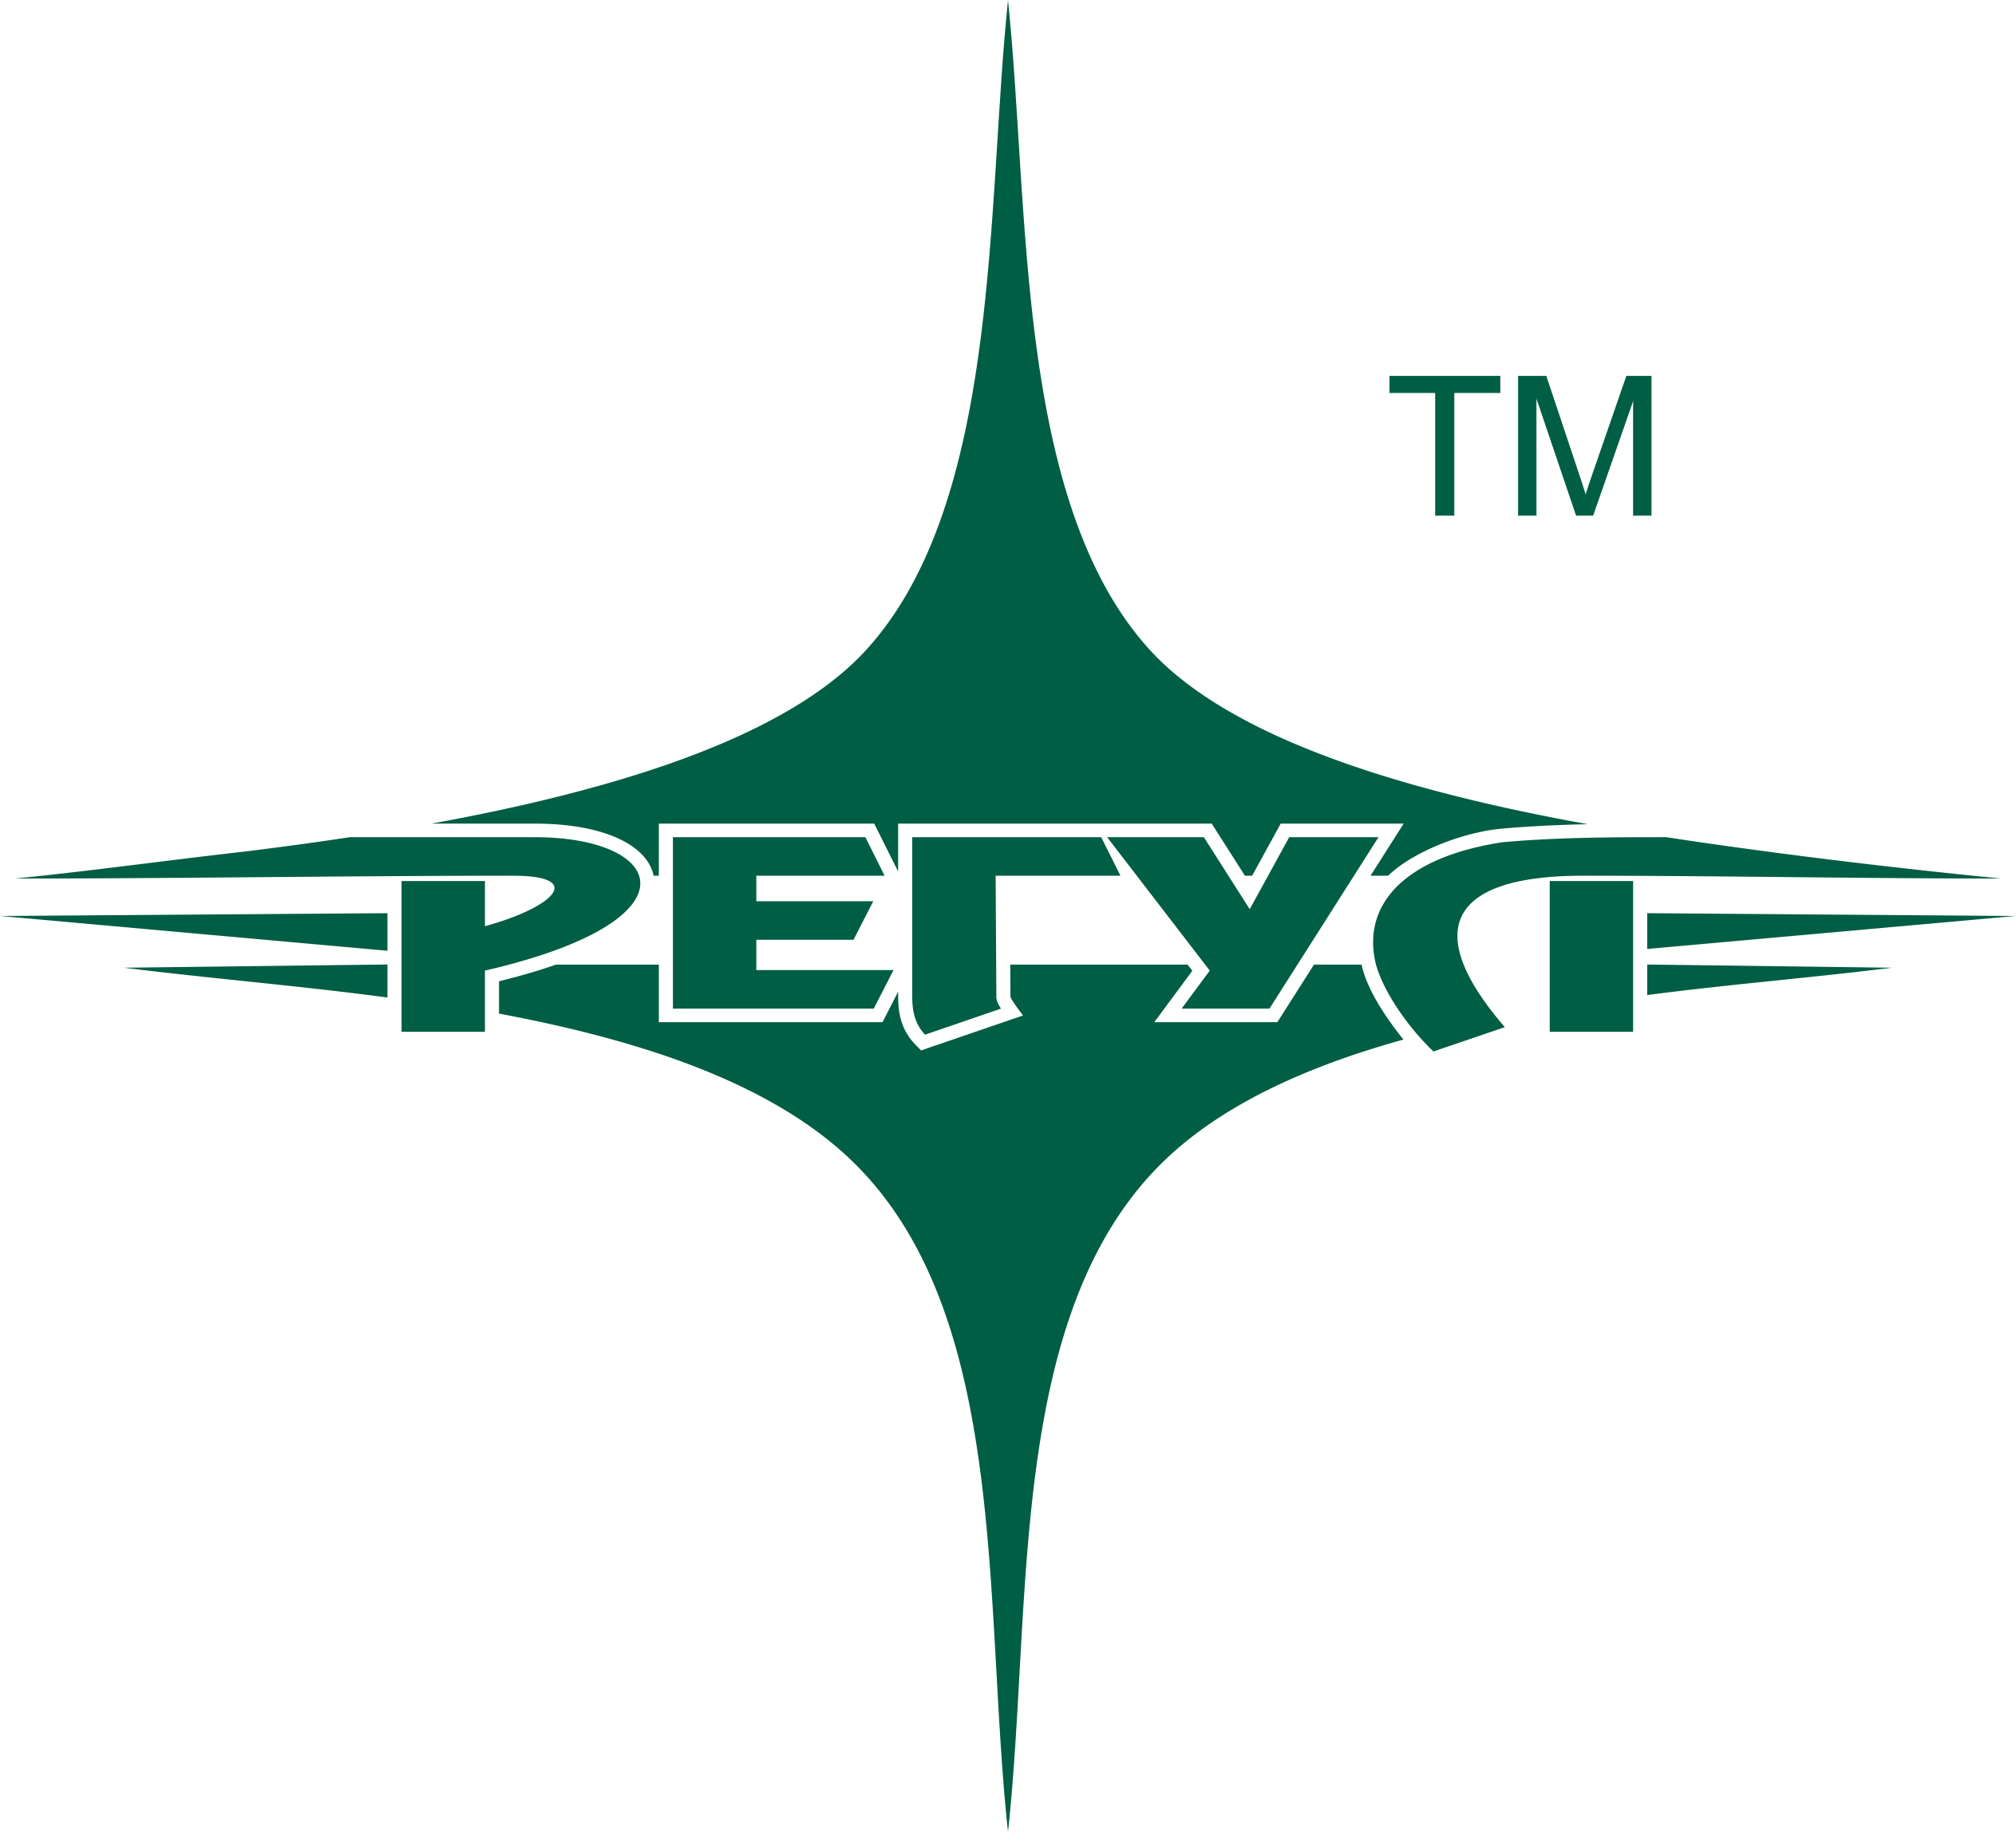 логотип компании РЕГУЛ